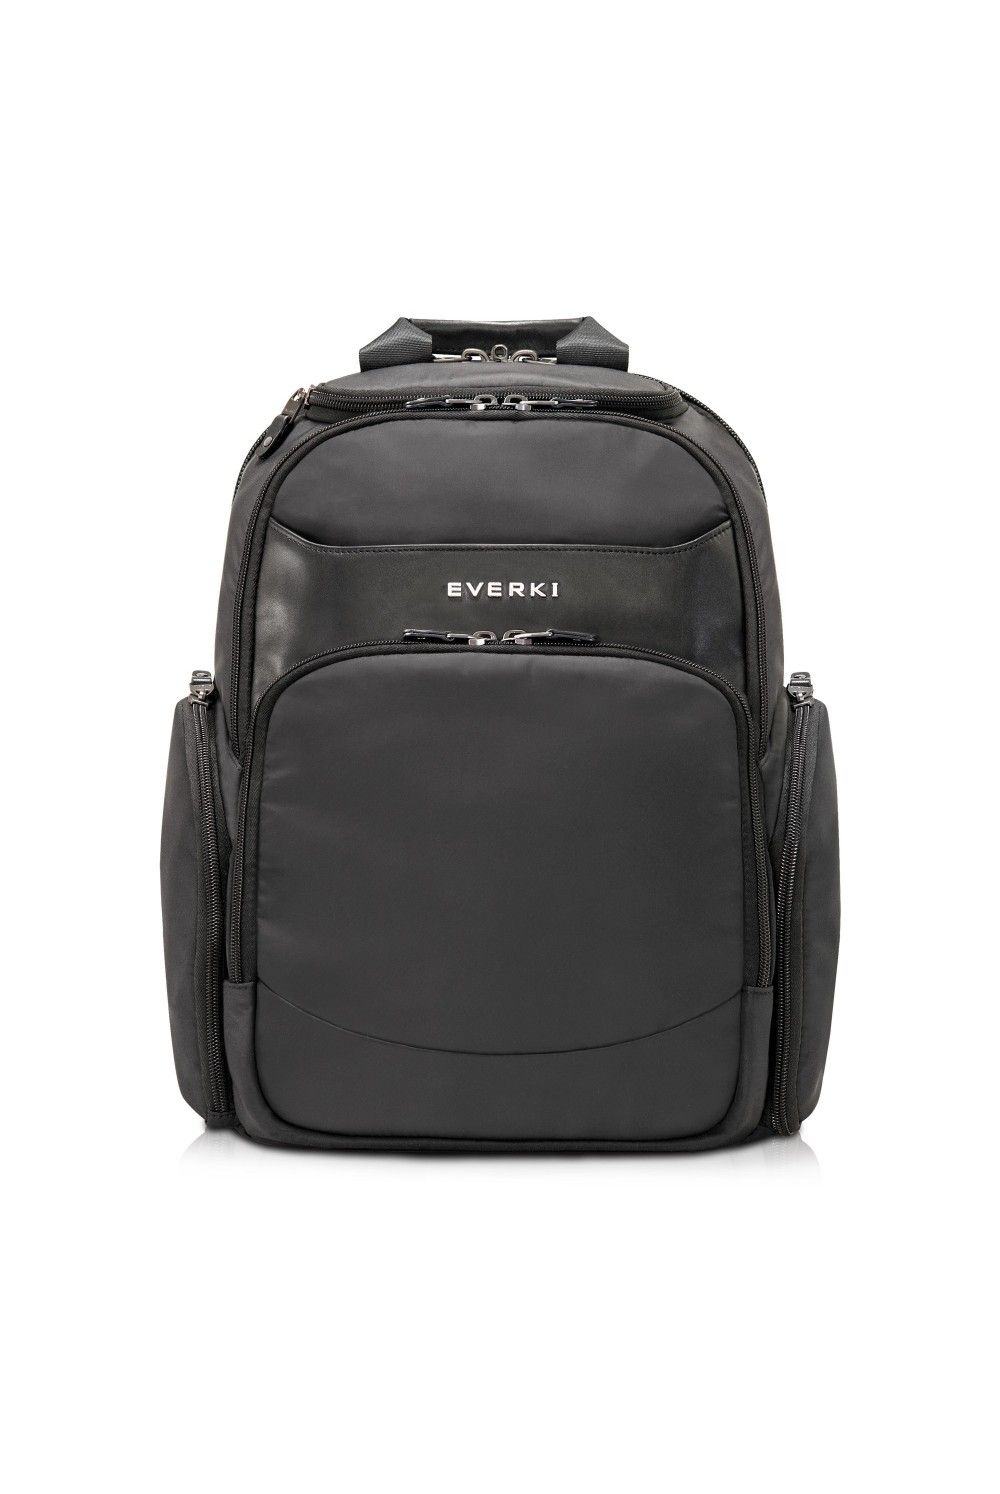 Premium Laptop Backpack Suite Everki 14 inches